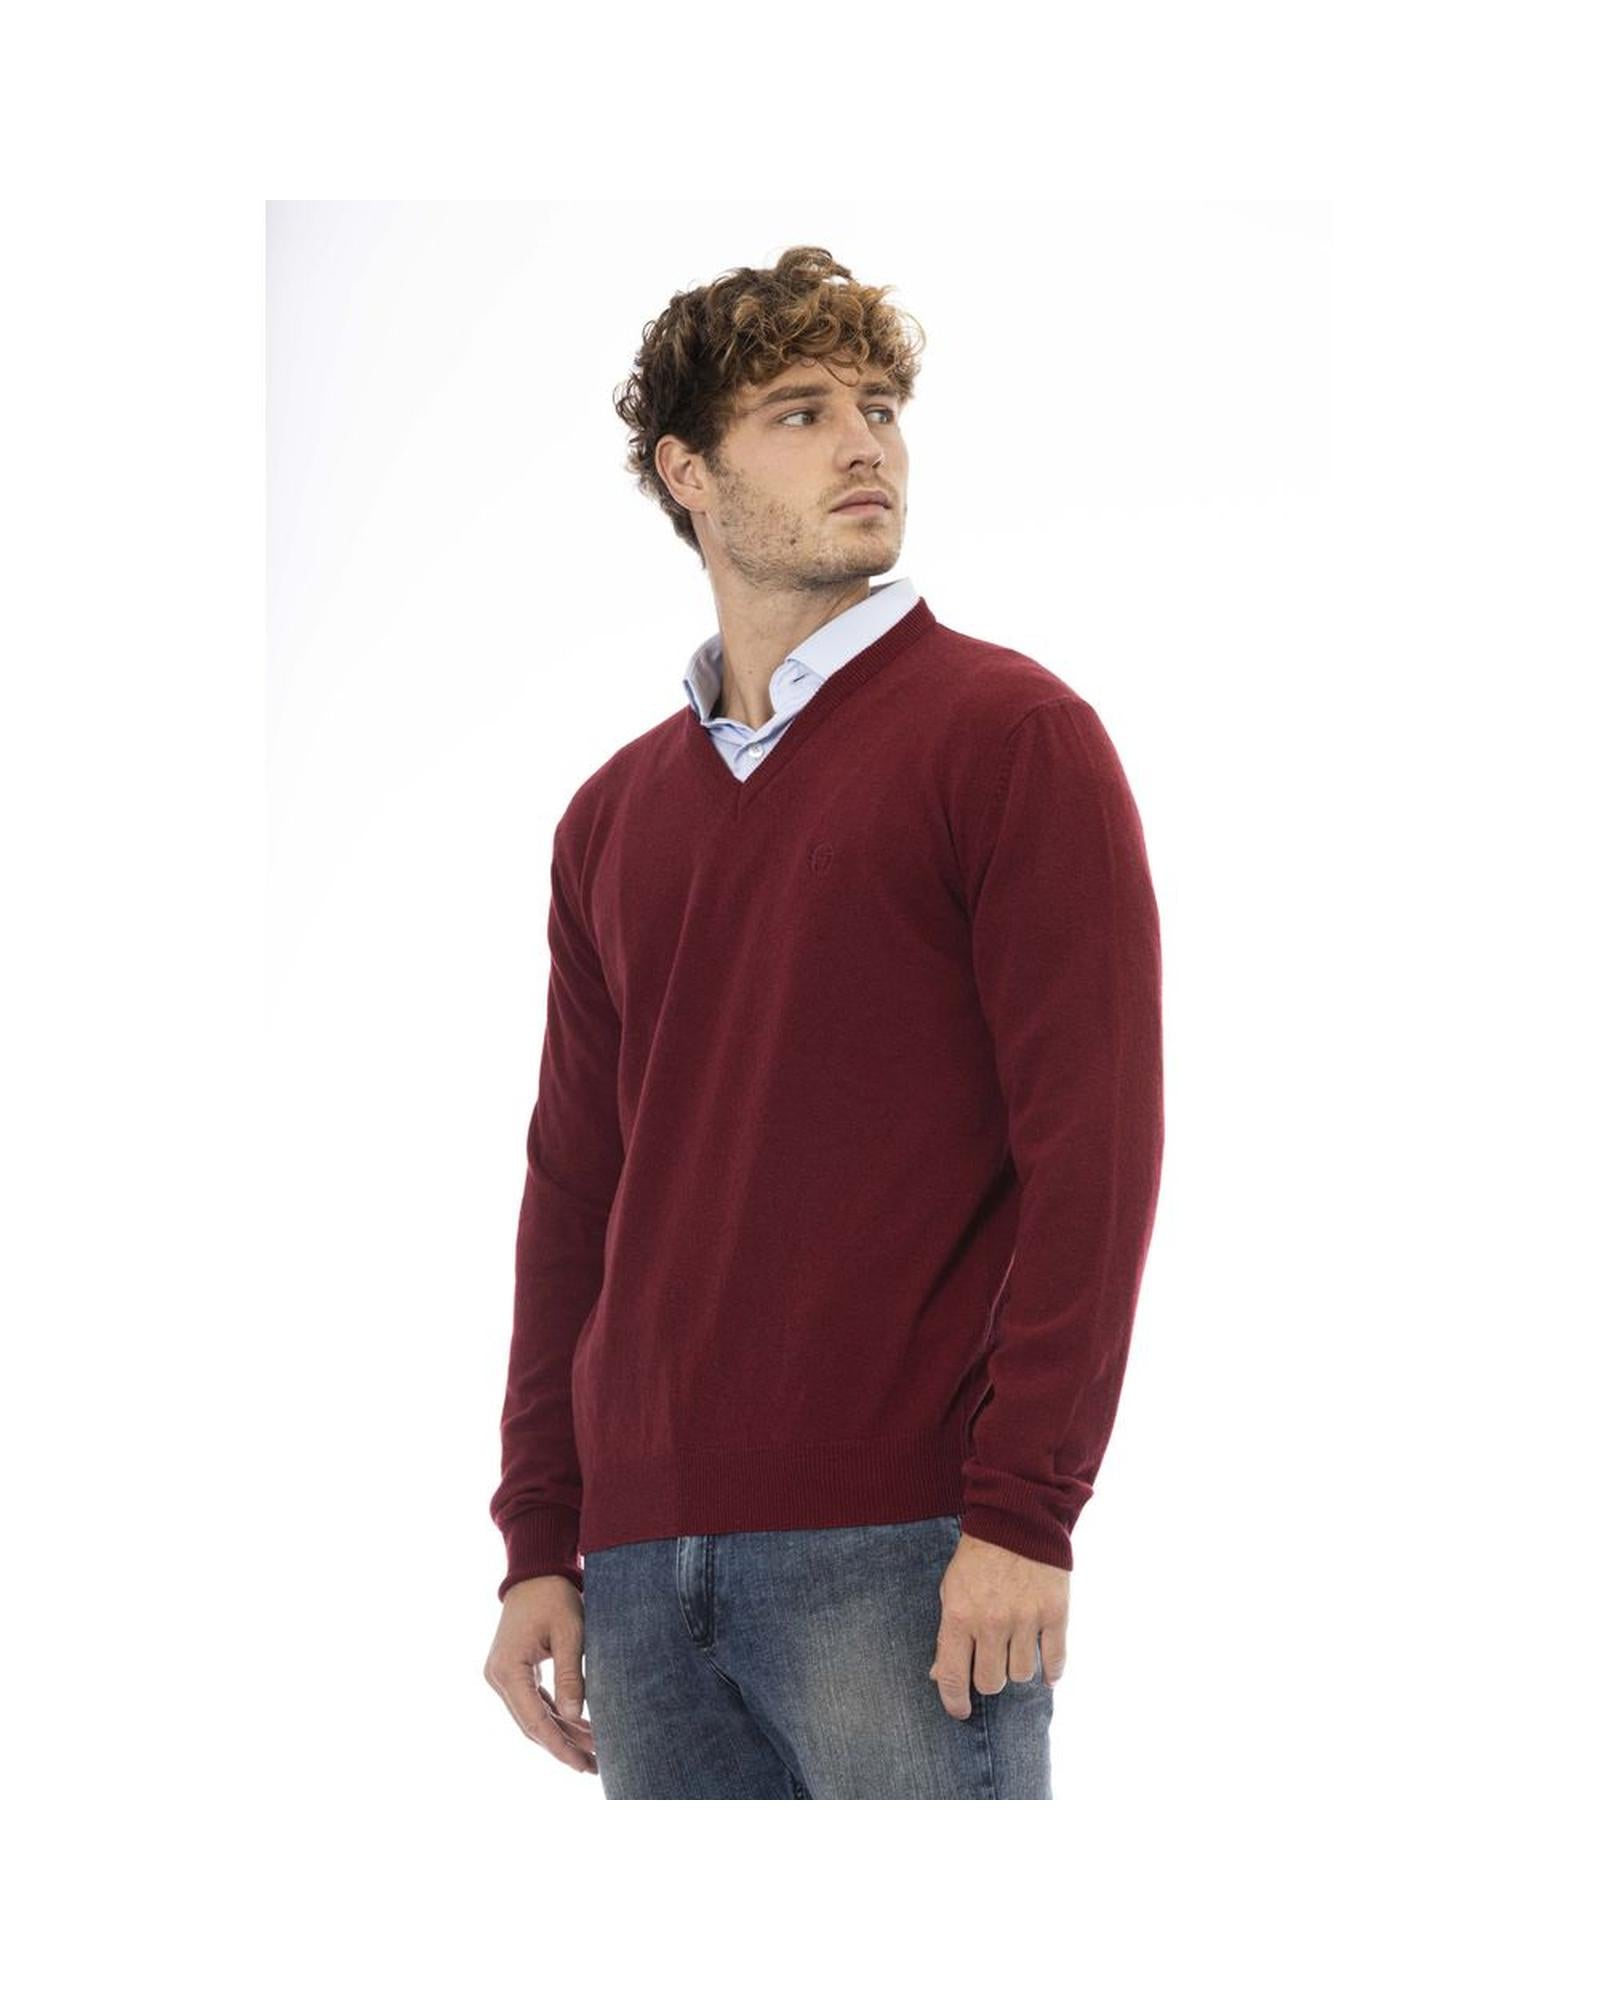 Men's Burgundy Wool Sweater - L